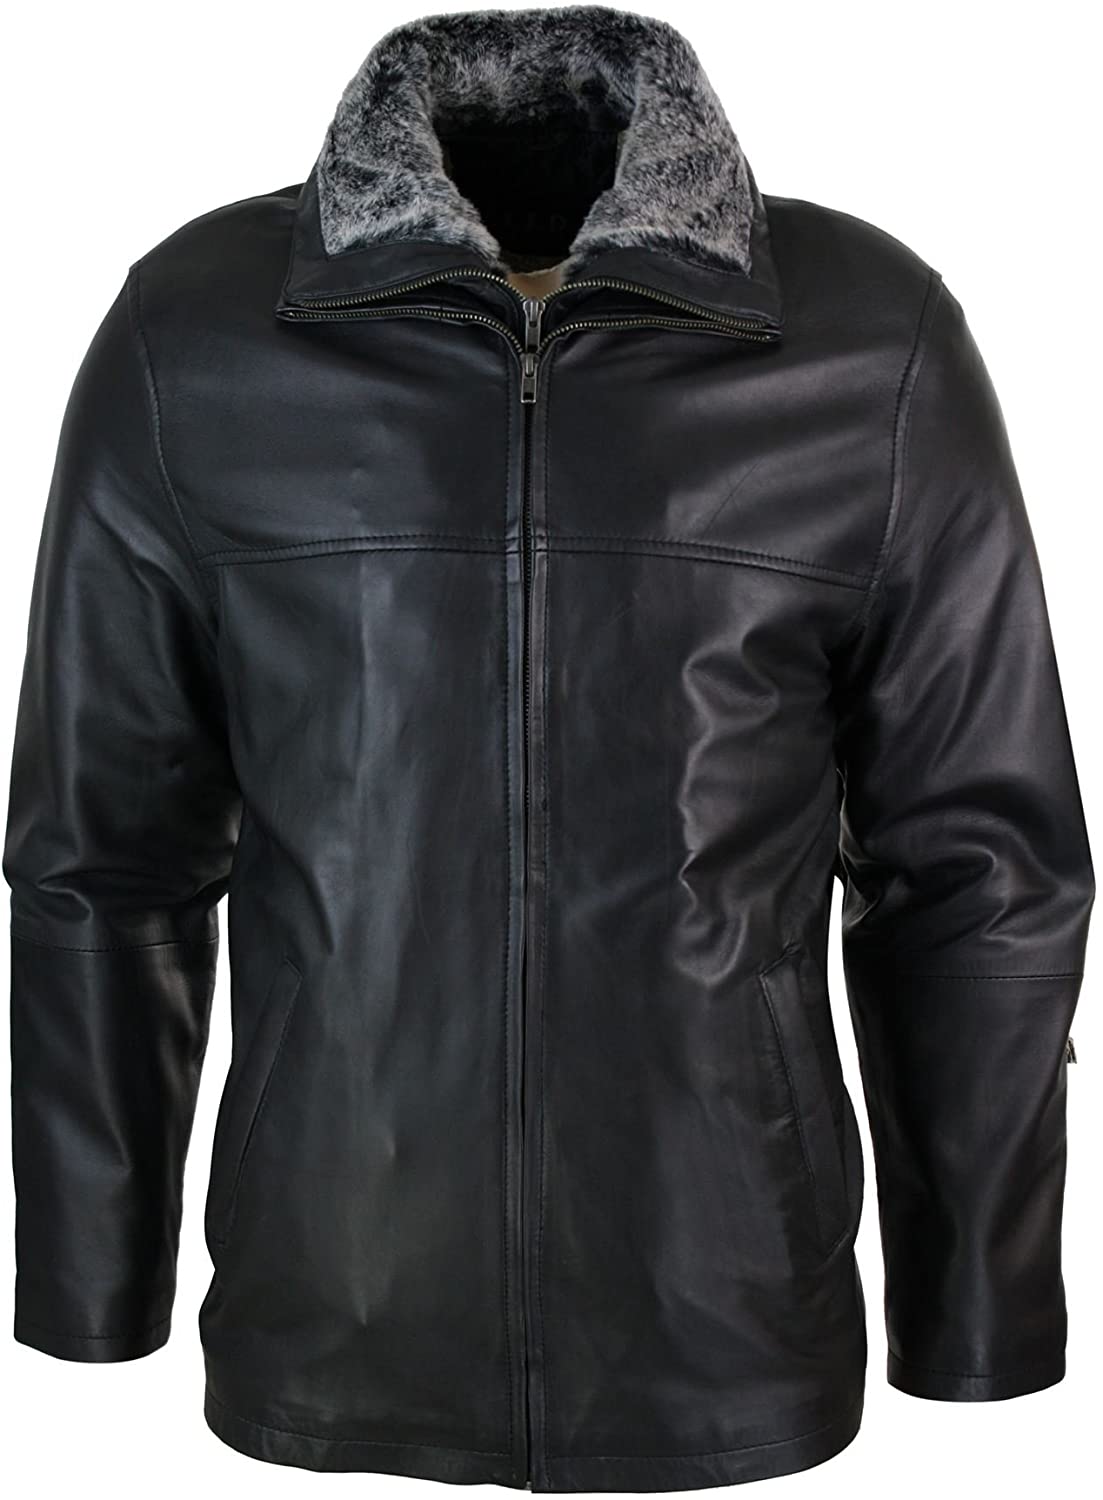 Men’s Classic Fur Leather Jacket in Black